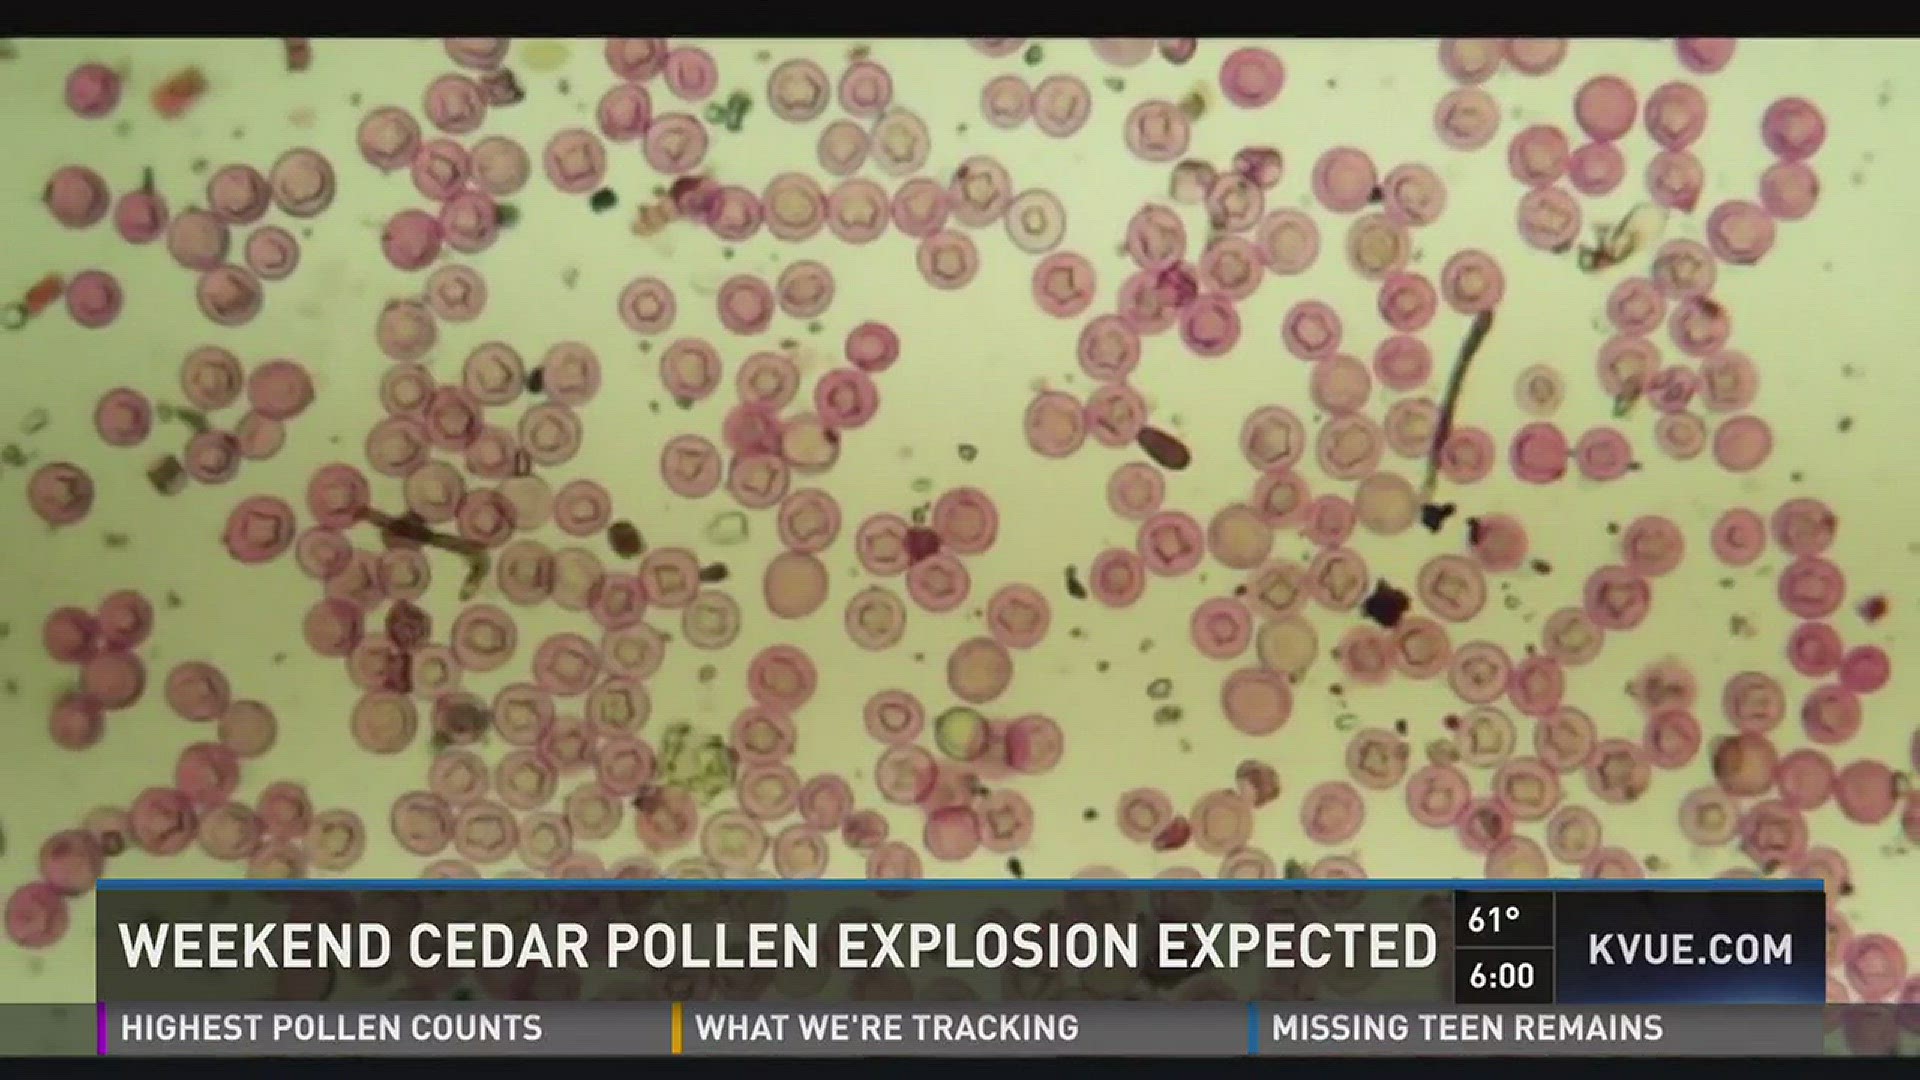 Weekend cedar pollen explosion expected